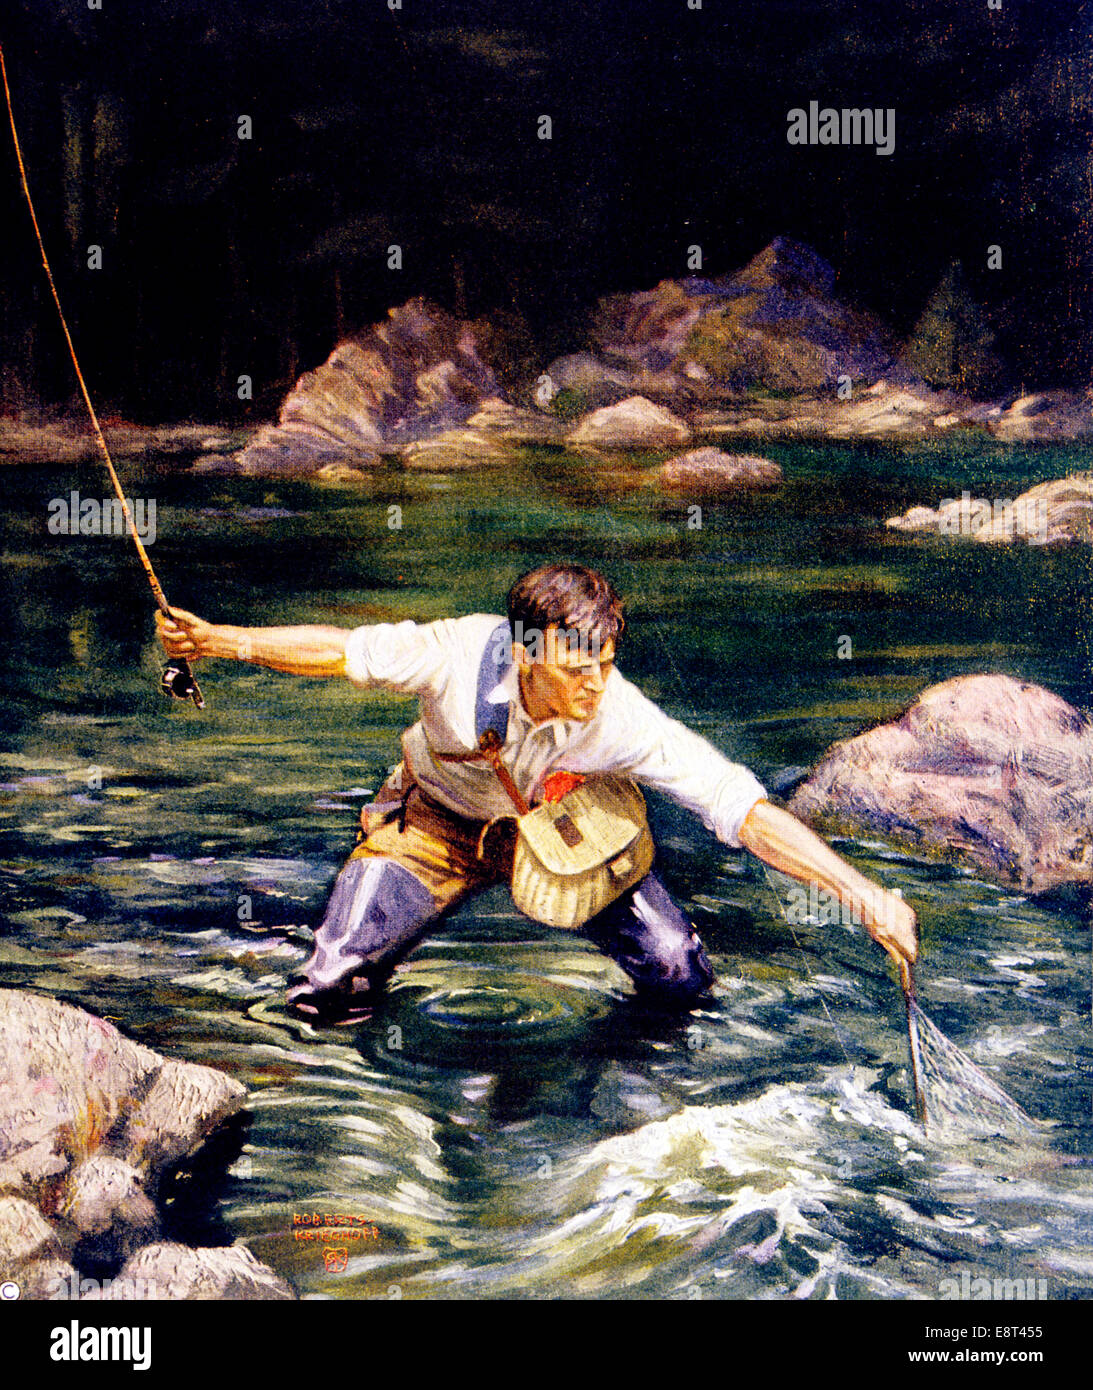 https://c8.alamy.com/comp/E8T455/1920s-cover-sunday-magazine-landing-the-trout-man-fishing-in-stream-E8T455.jpg